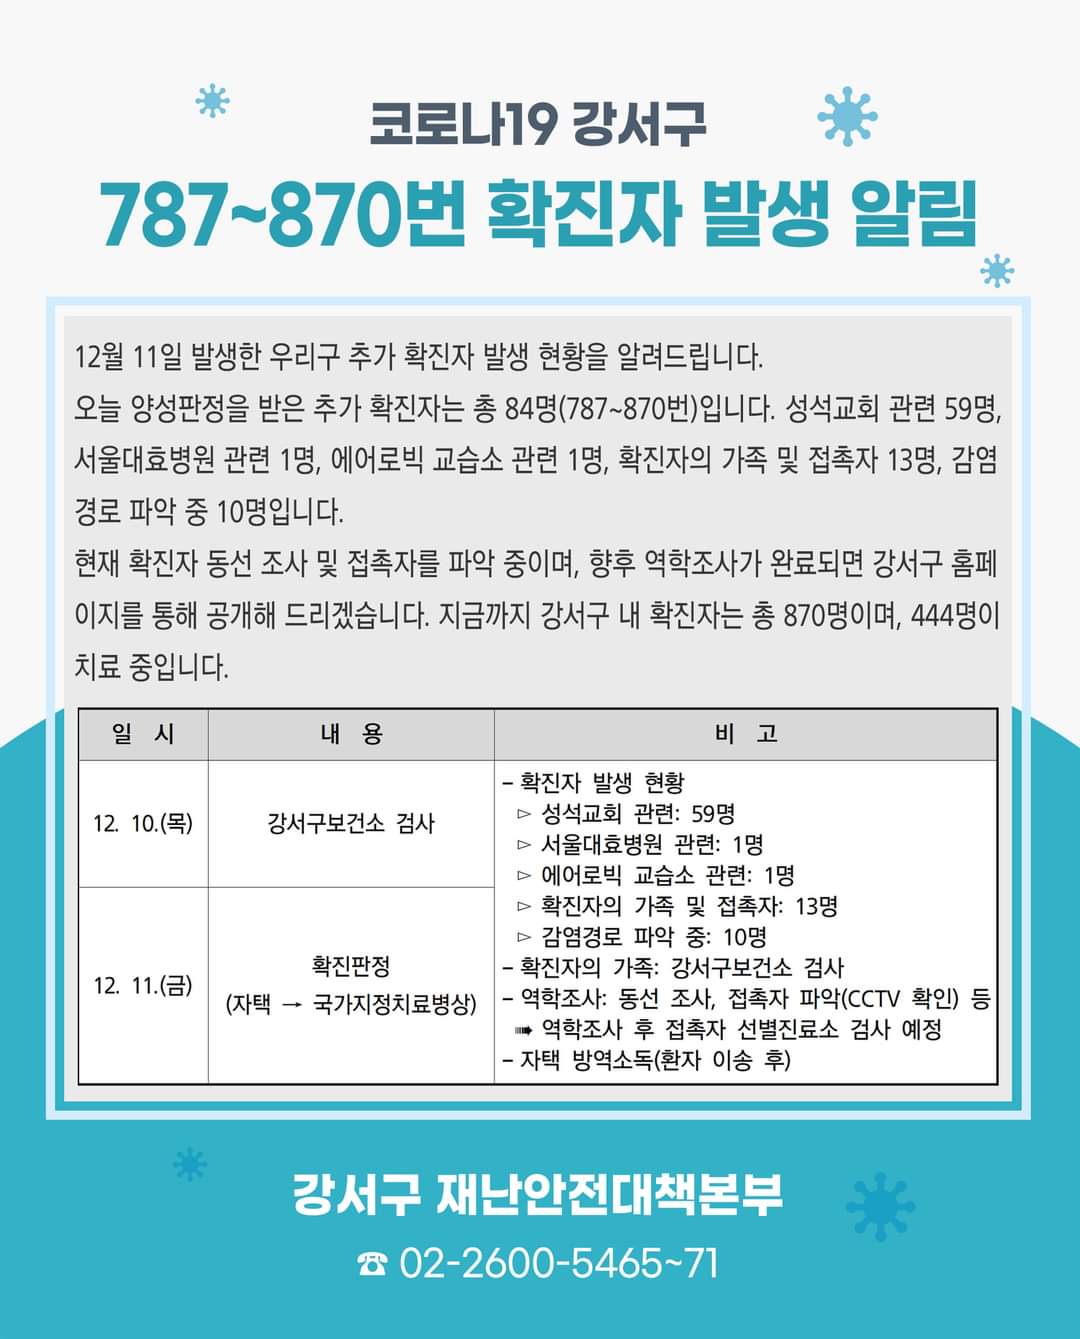 84 confirmed in Gangseo-gu, Seoul (59 church members)